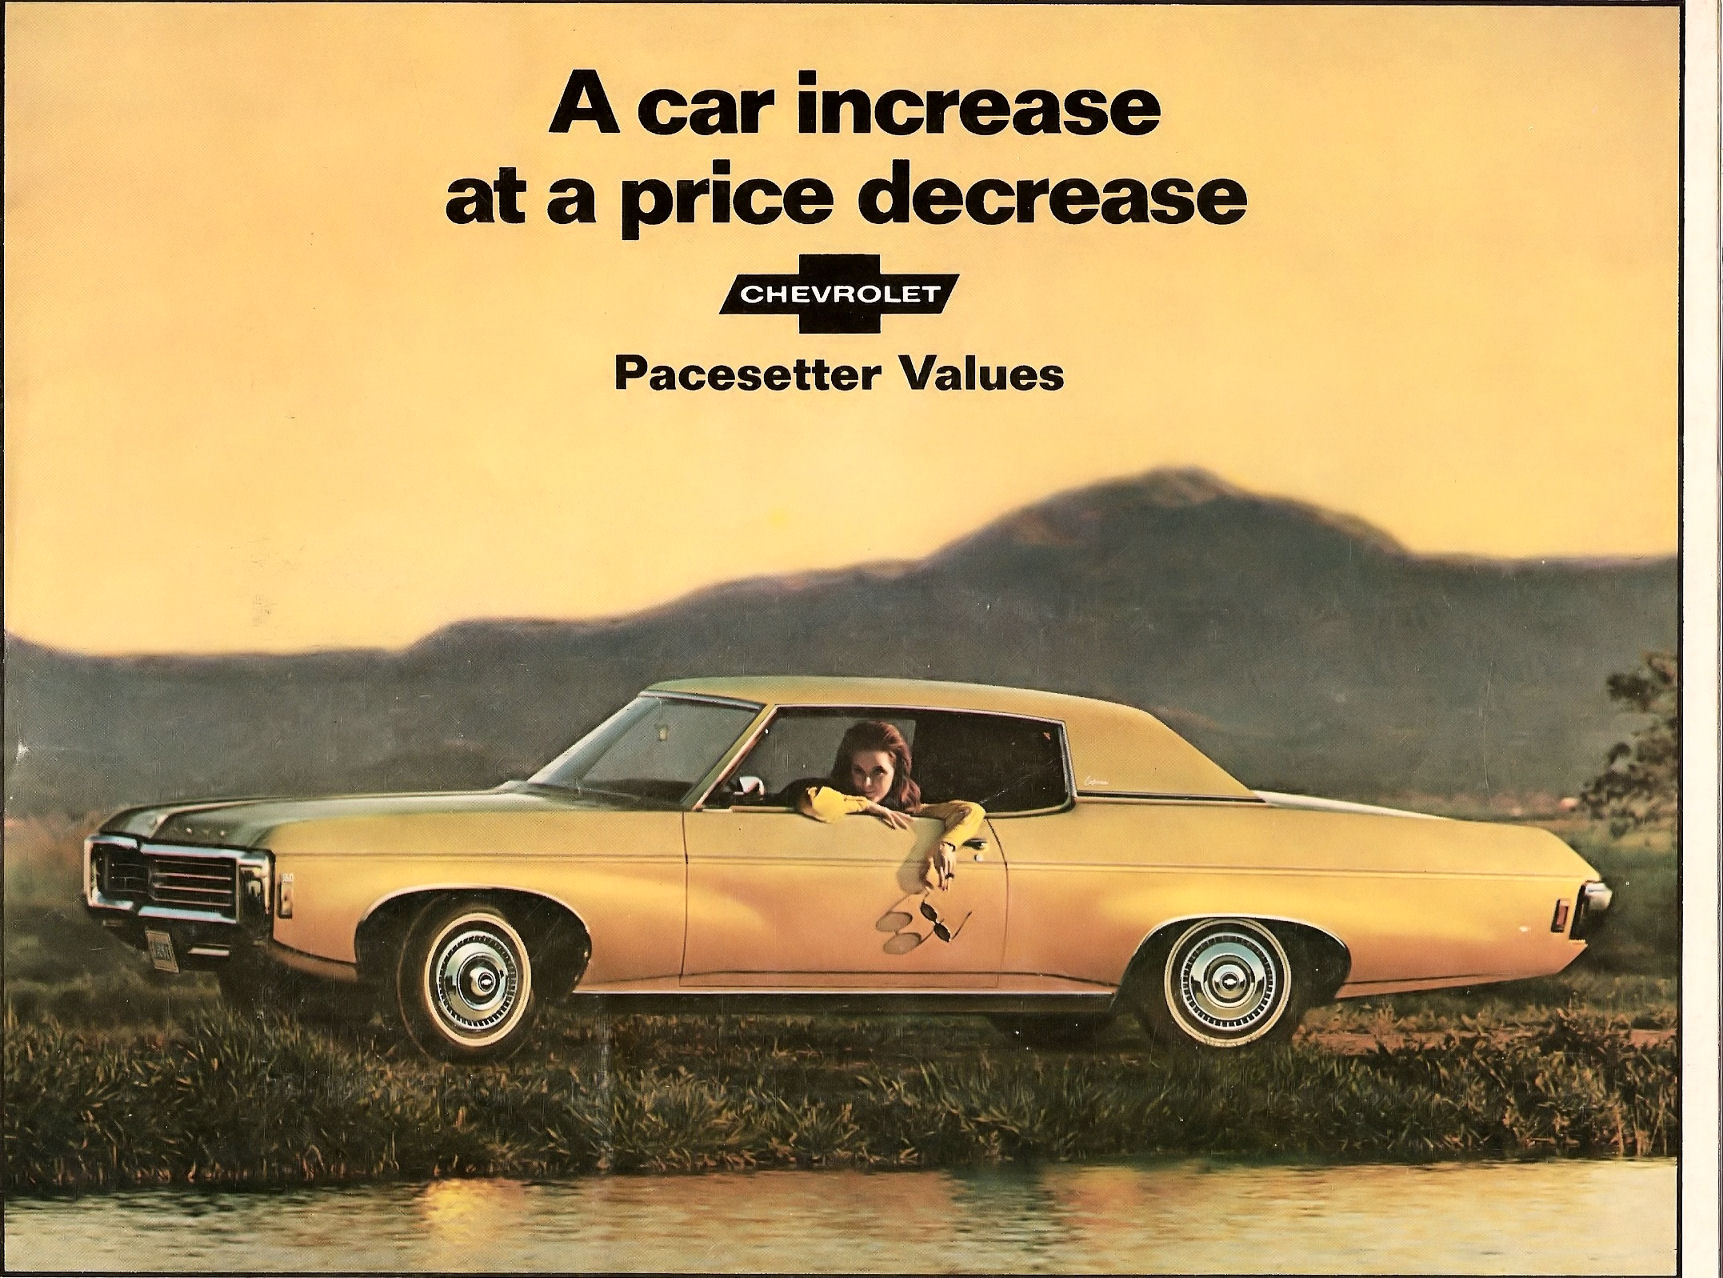 1969_Chevrolet_Pacesetter_Values_Mailer-01